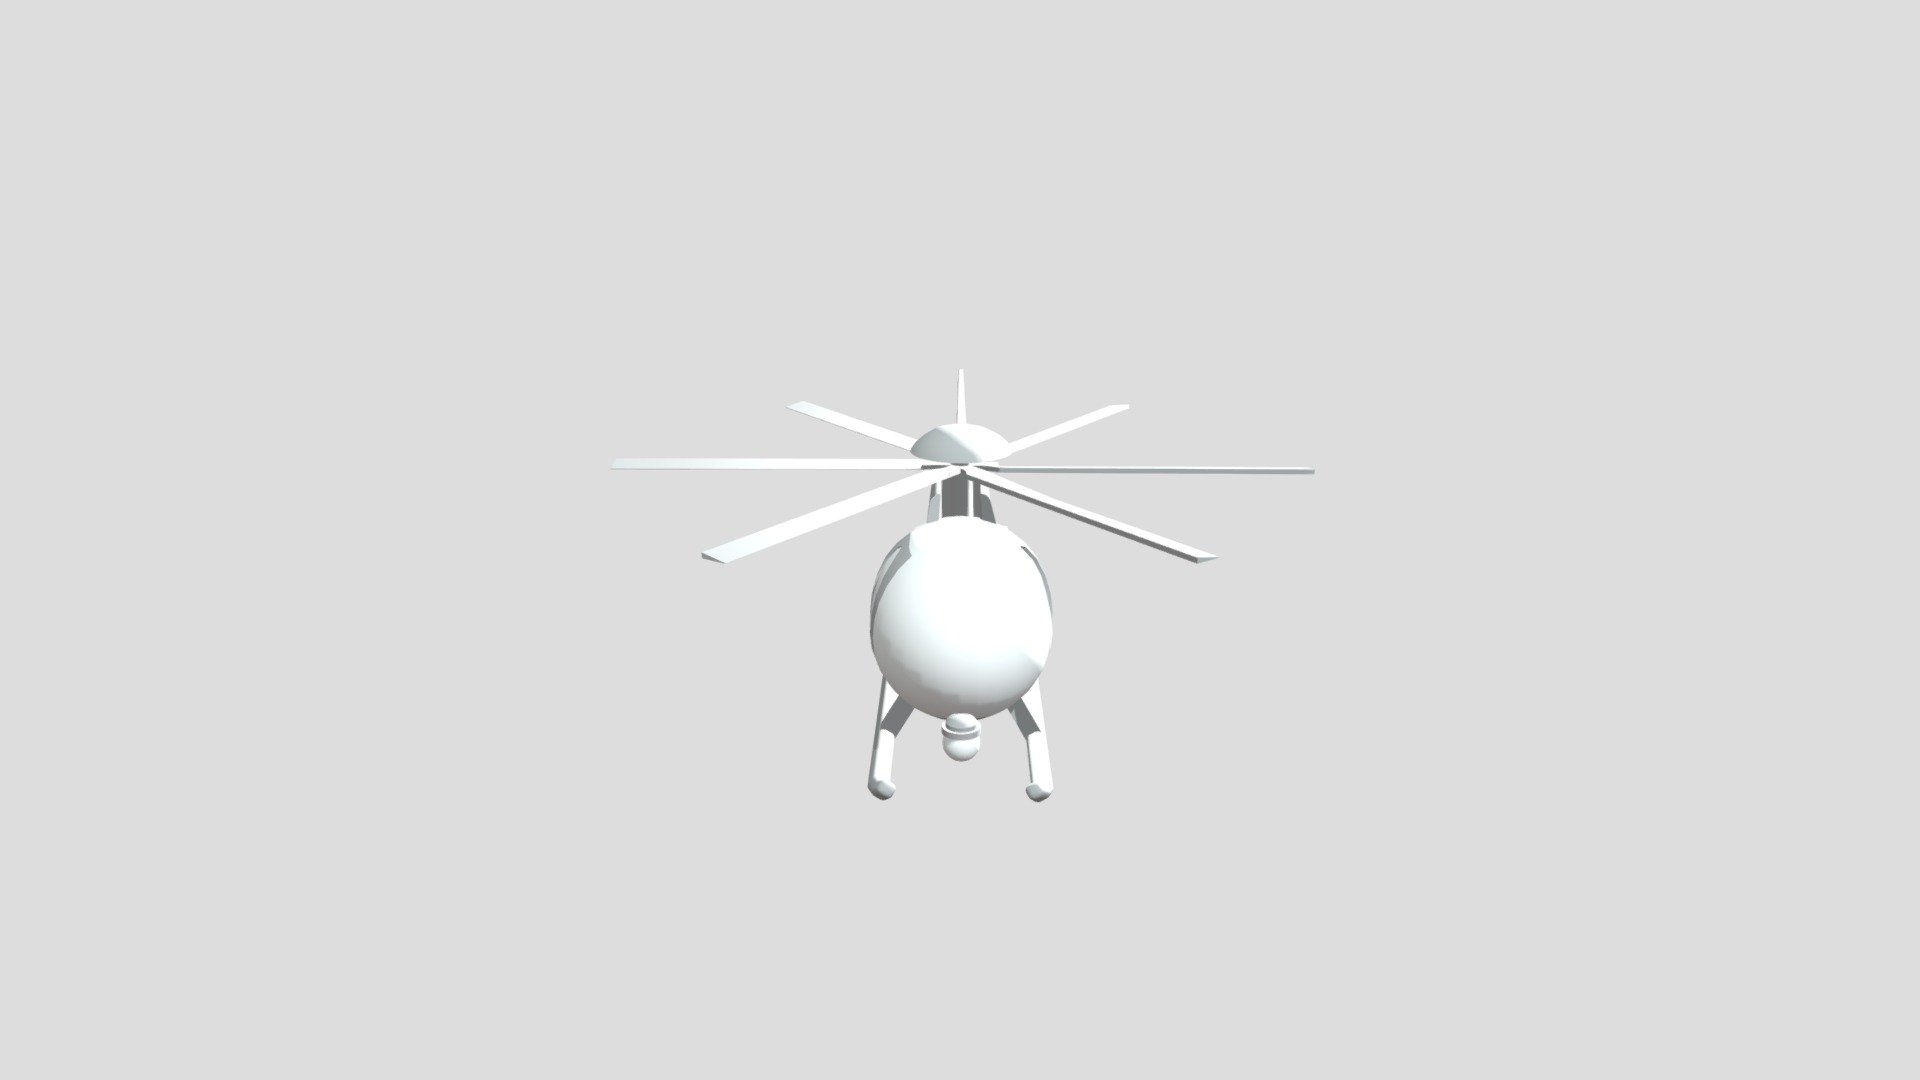 Little Bird Helicopter (Buzzard)